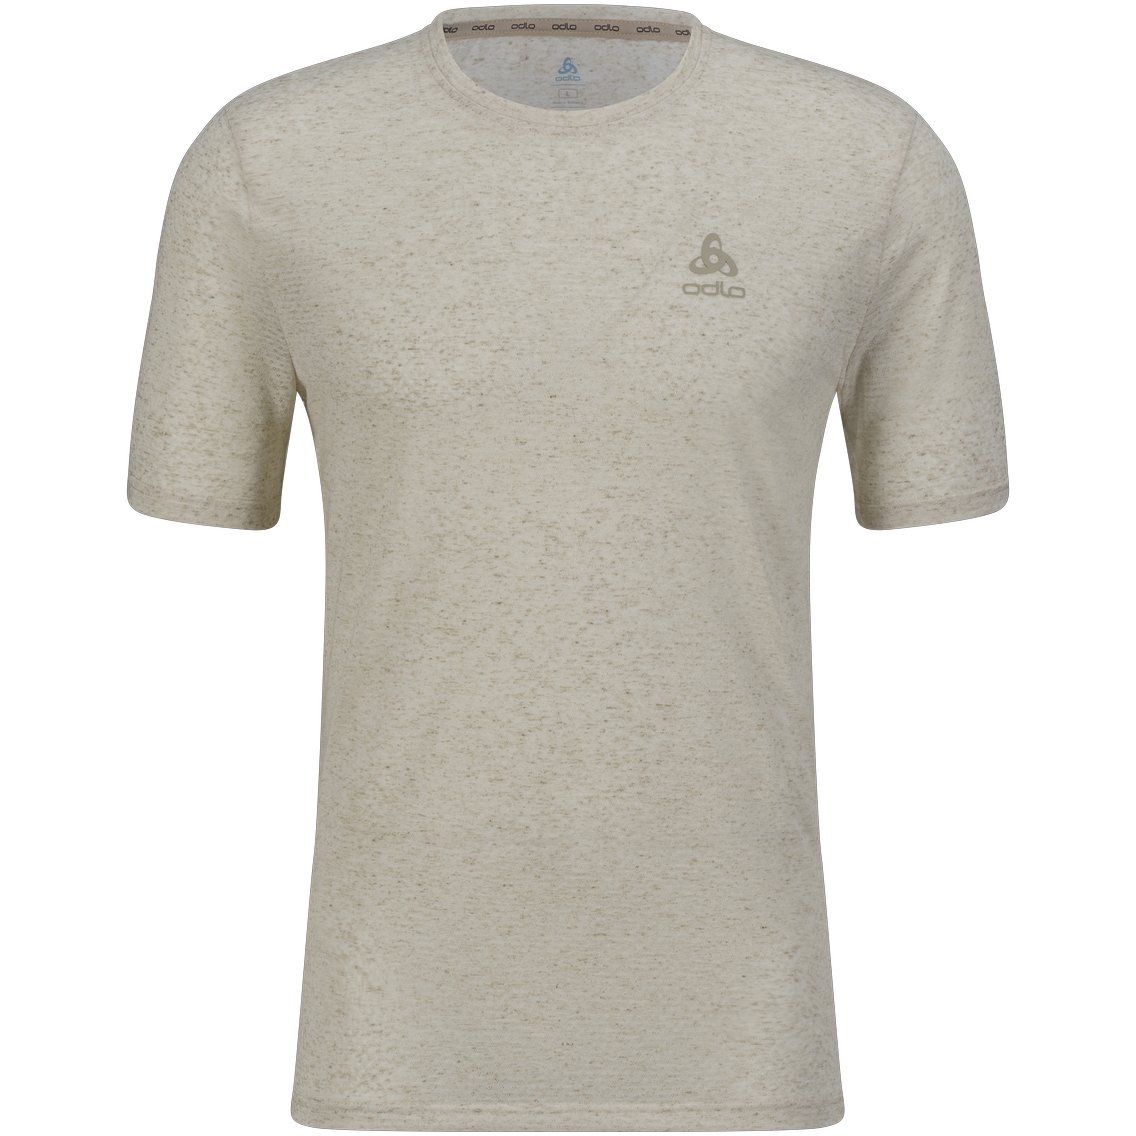 Produktbild von Odlo Active 365 Linencool T-Shirt Herren - zero dye melange